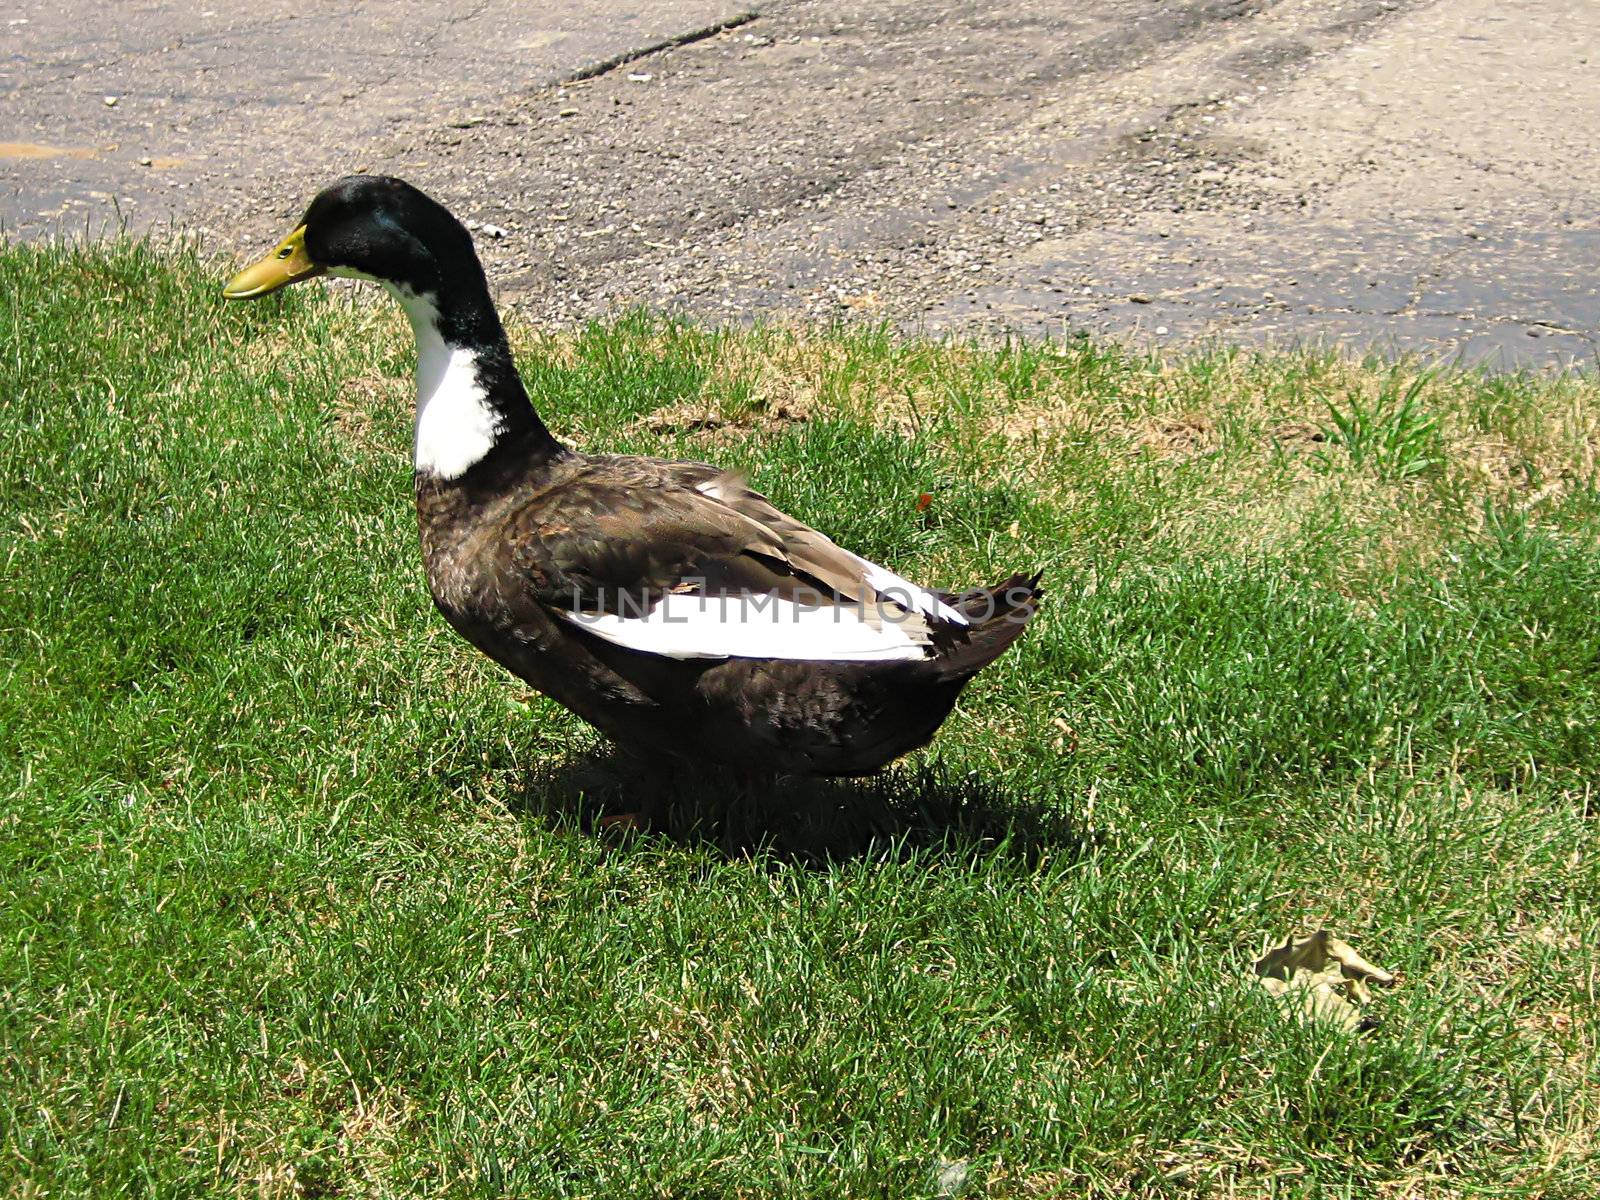 A photograph of a duck near a pond.